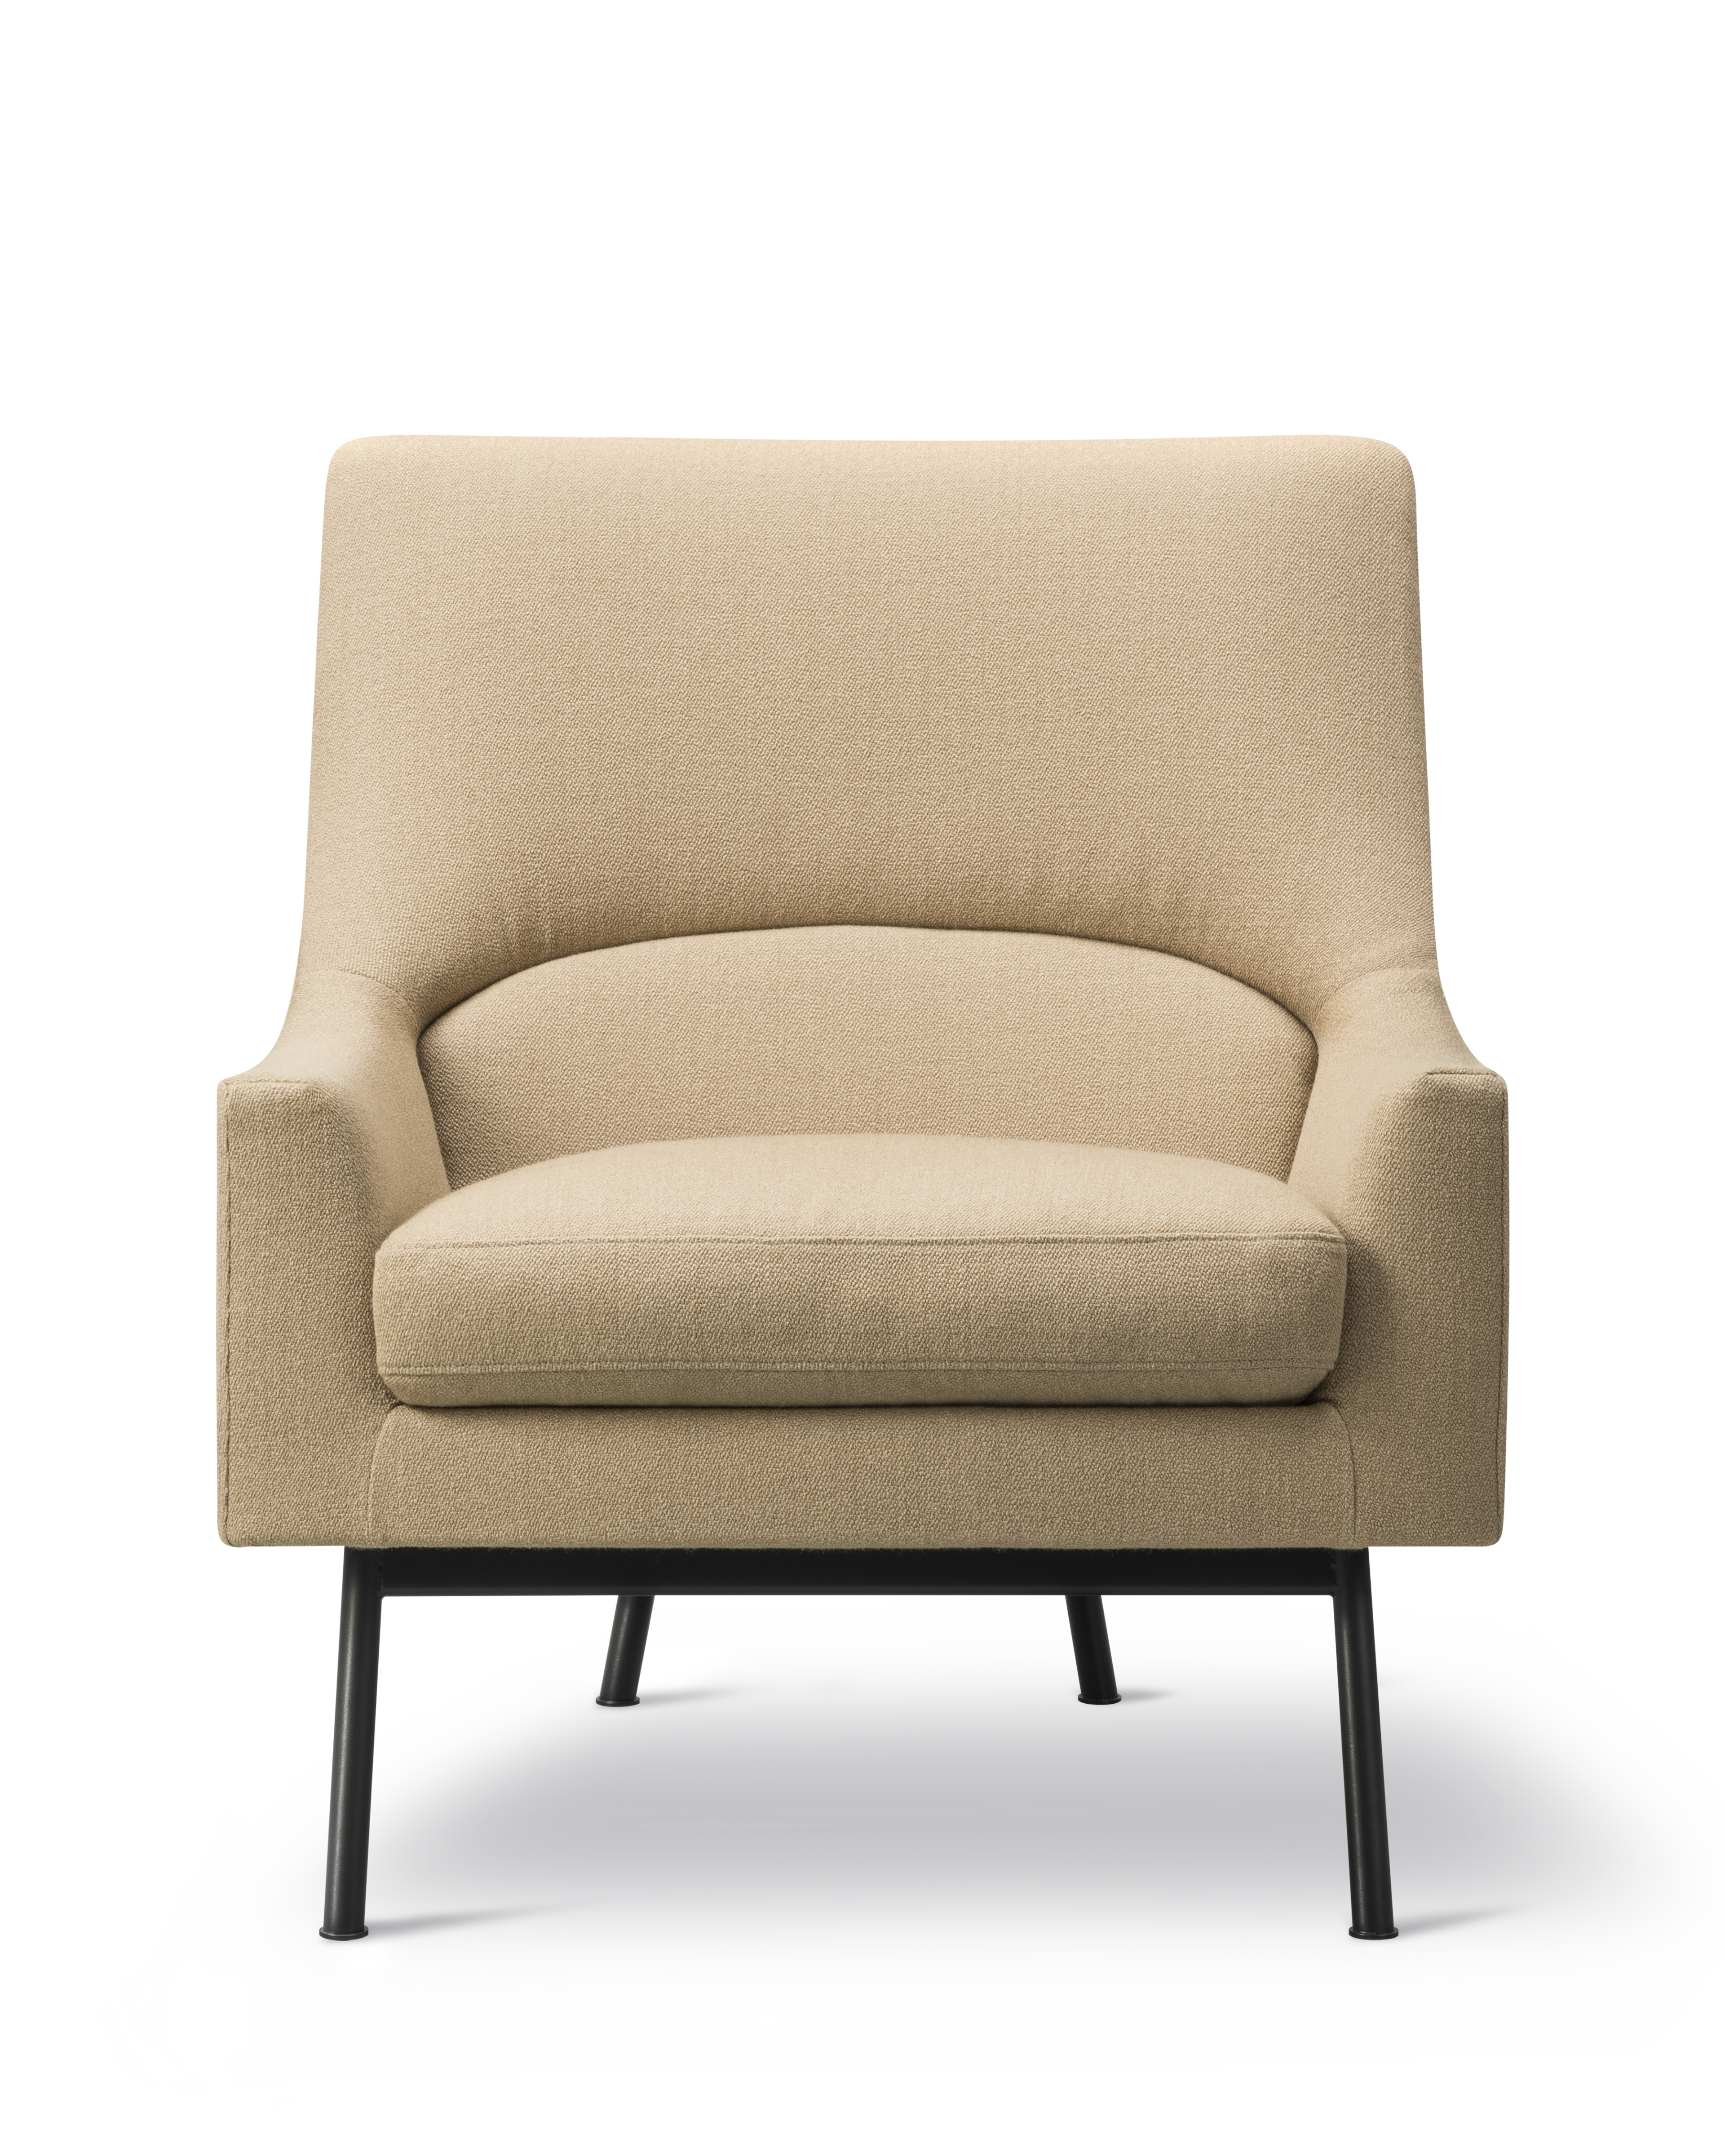 A-Chair - Vidar 333 / Stel i sort metal